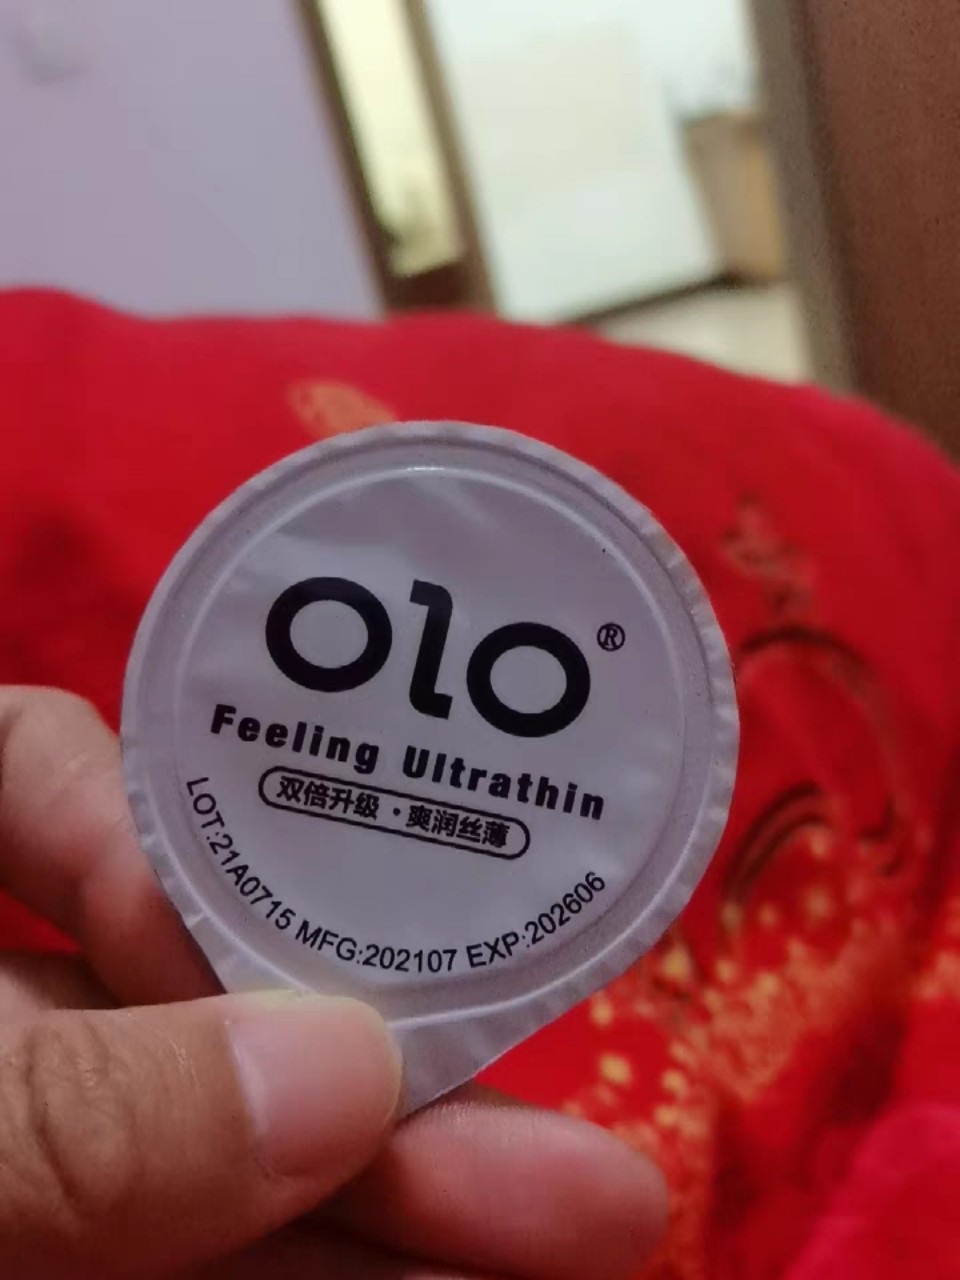 Bao cao su Olo 001 Feeling Ultra Thin mỏng nhất thế giới